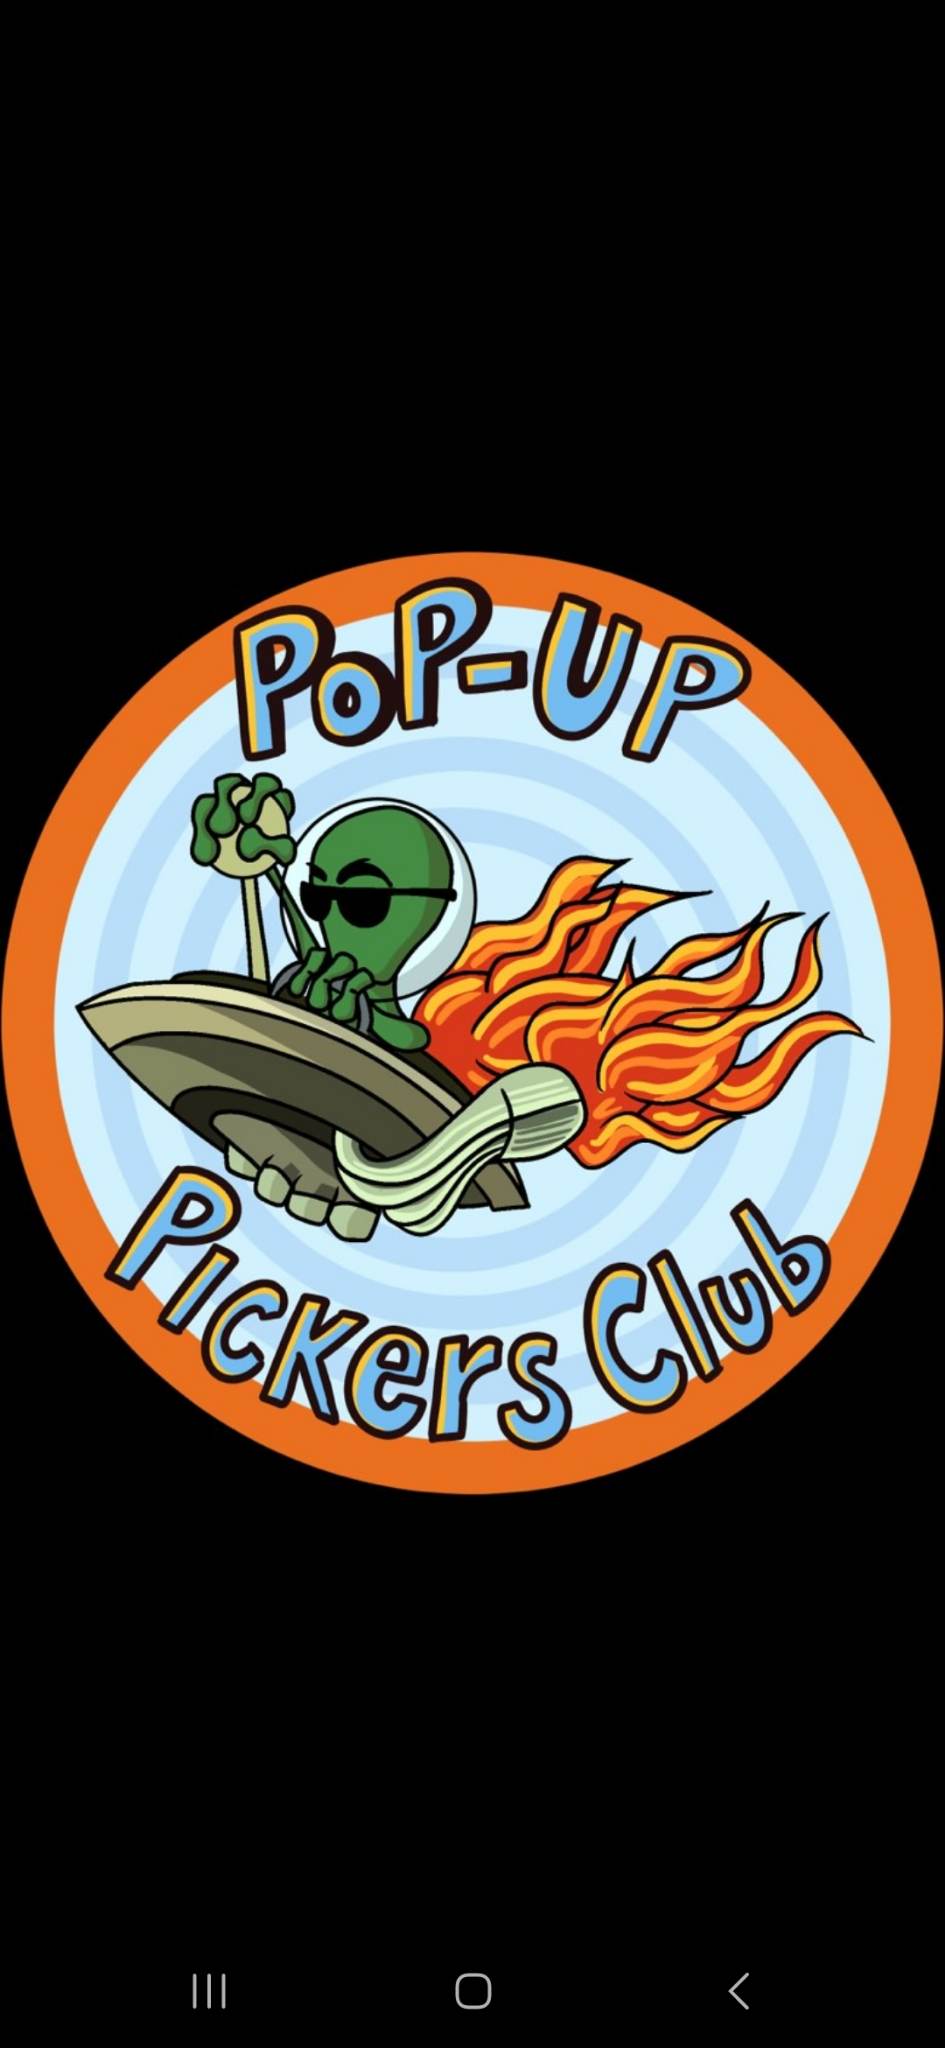 Pop-up Pickers Club Vintage, Makers Market 